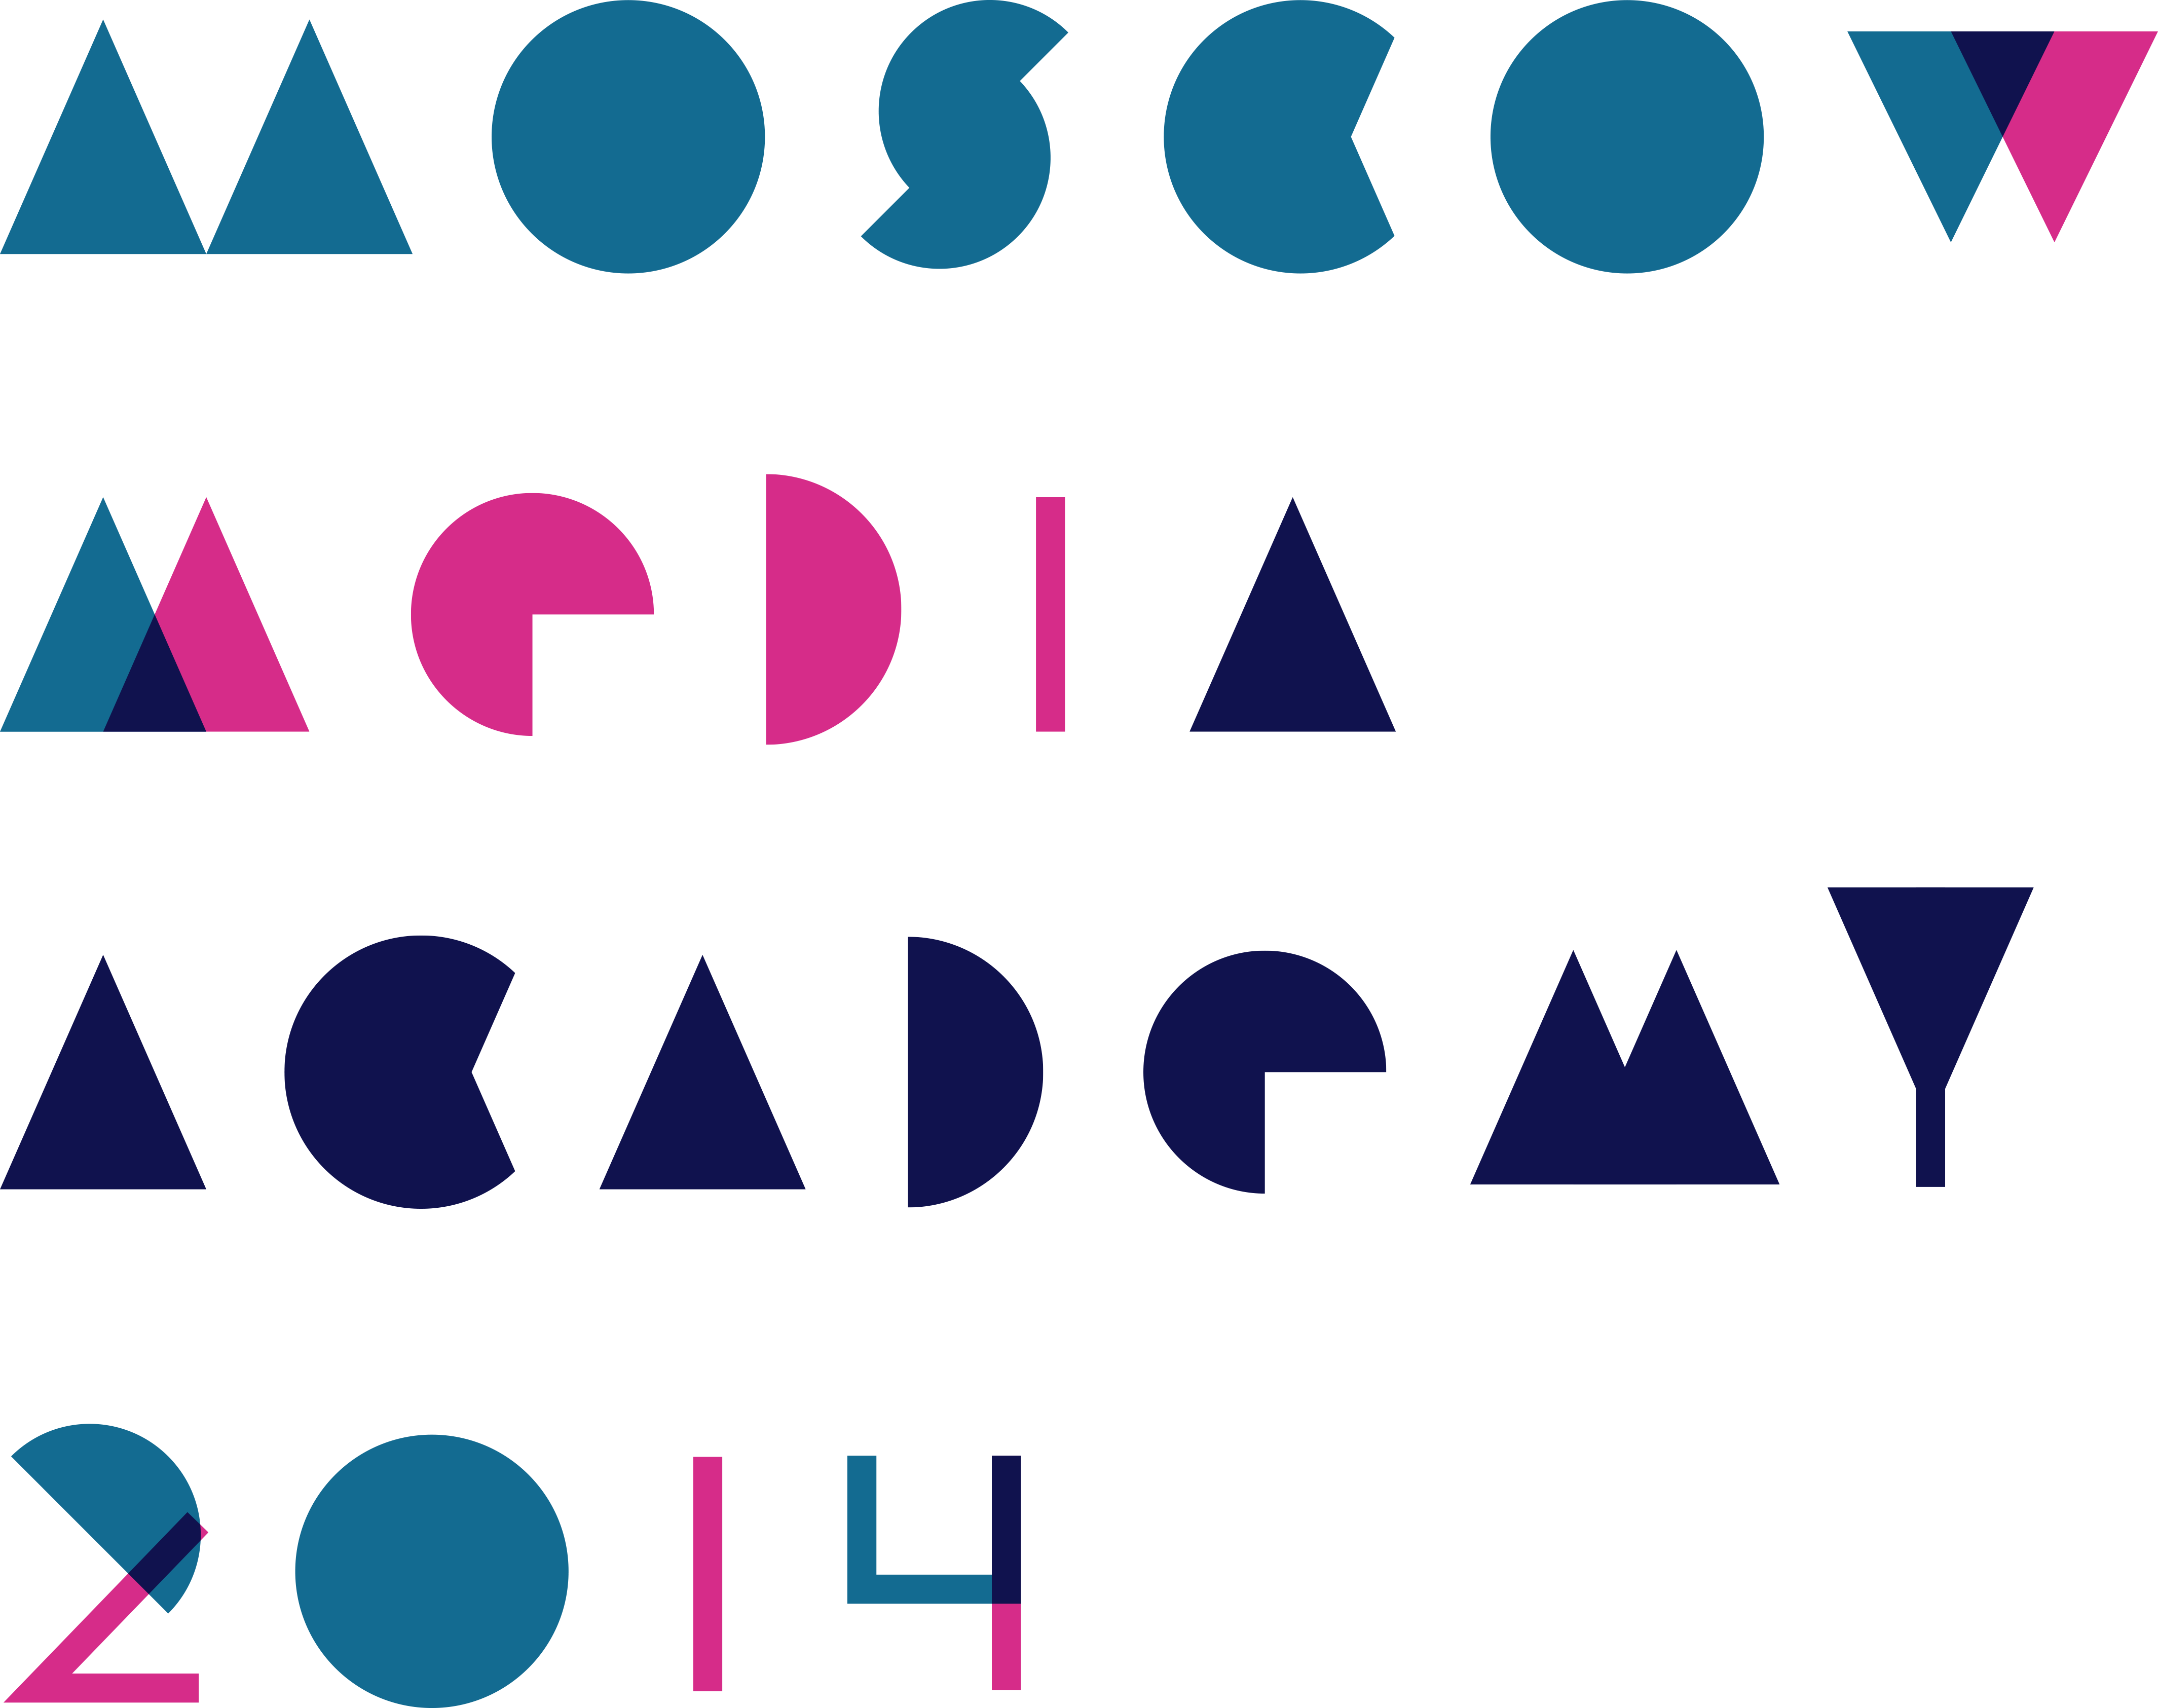 moscow media academy text logo